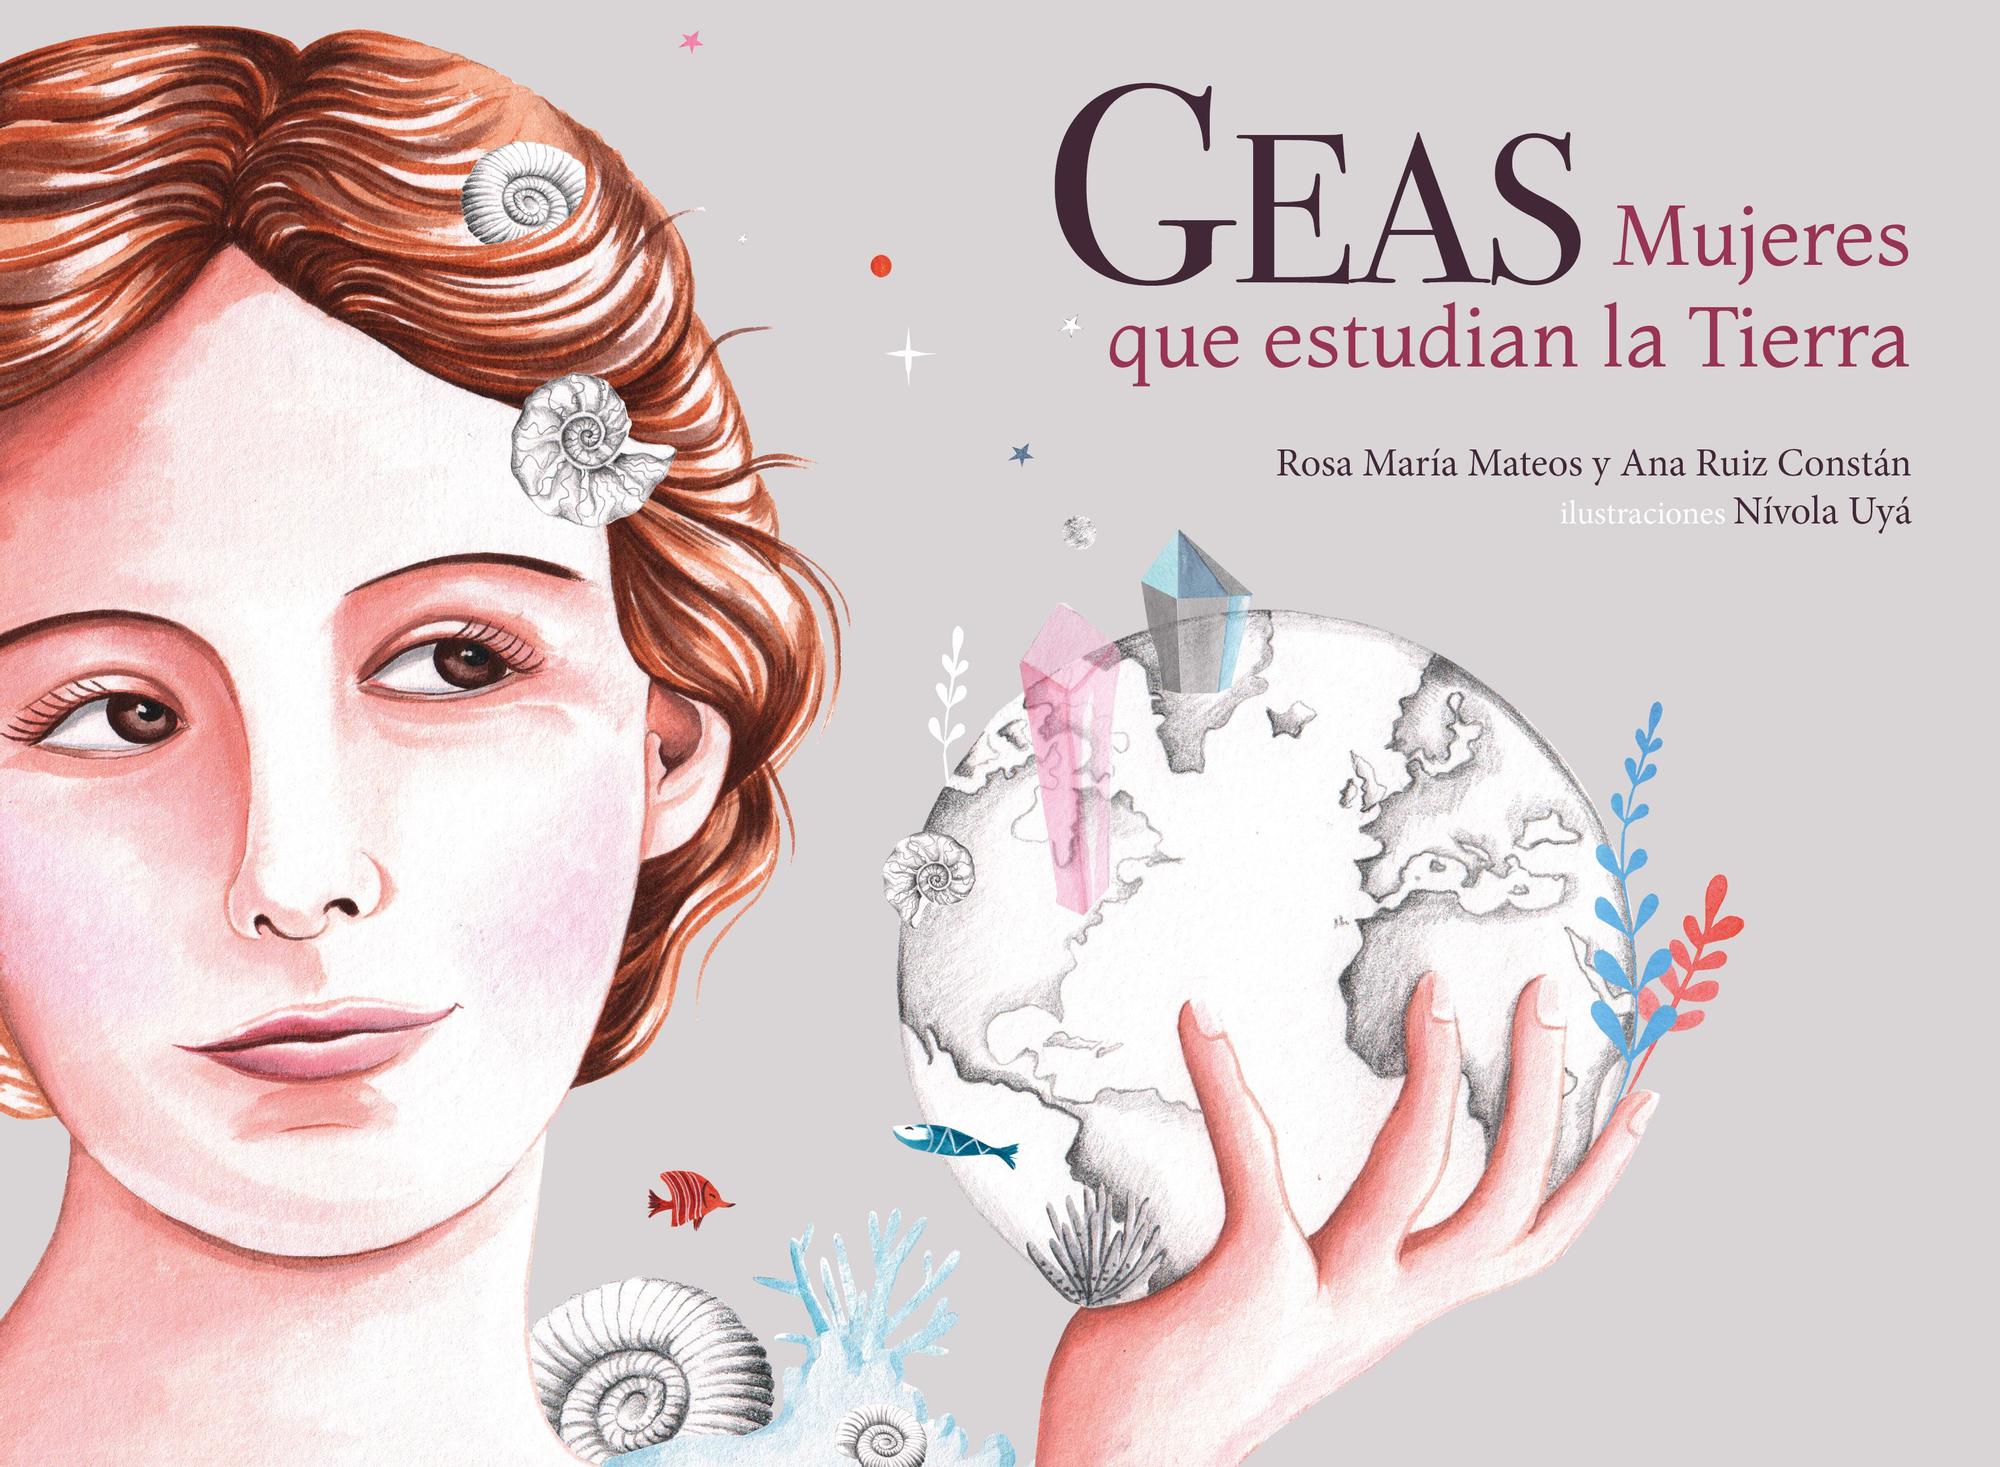 Titelblatt des Buches &quot;Geas, mujeres que estudian la Tierra&quot;, illustriert von Nívola Uyá.